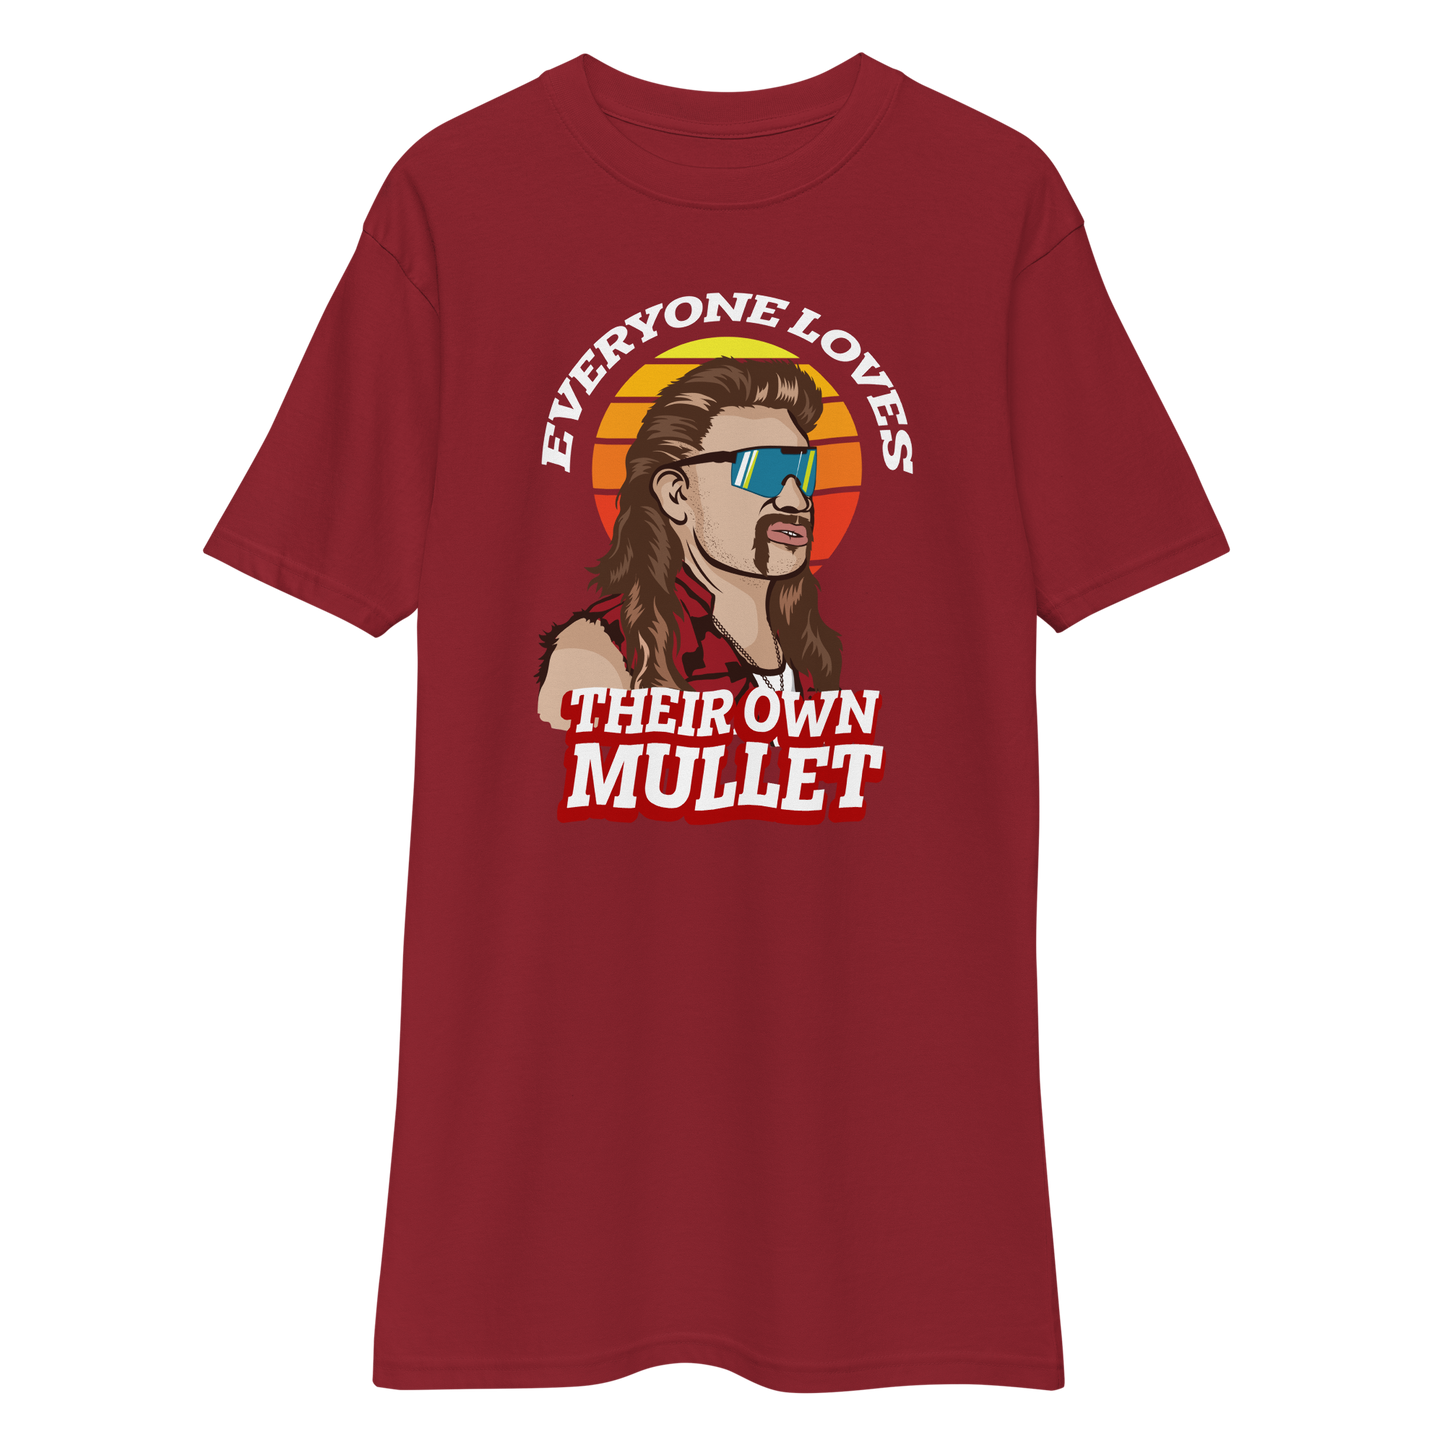 Everyone Loves Their Own Mullet - Men’s Heavyweight T-Shirt